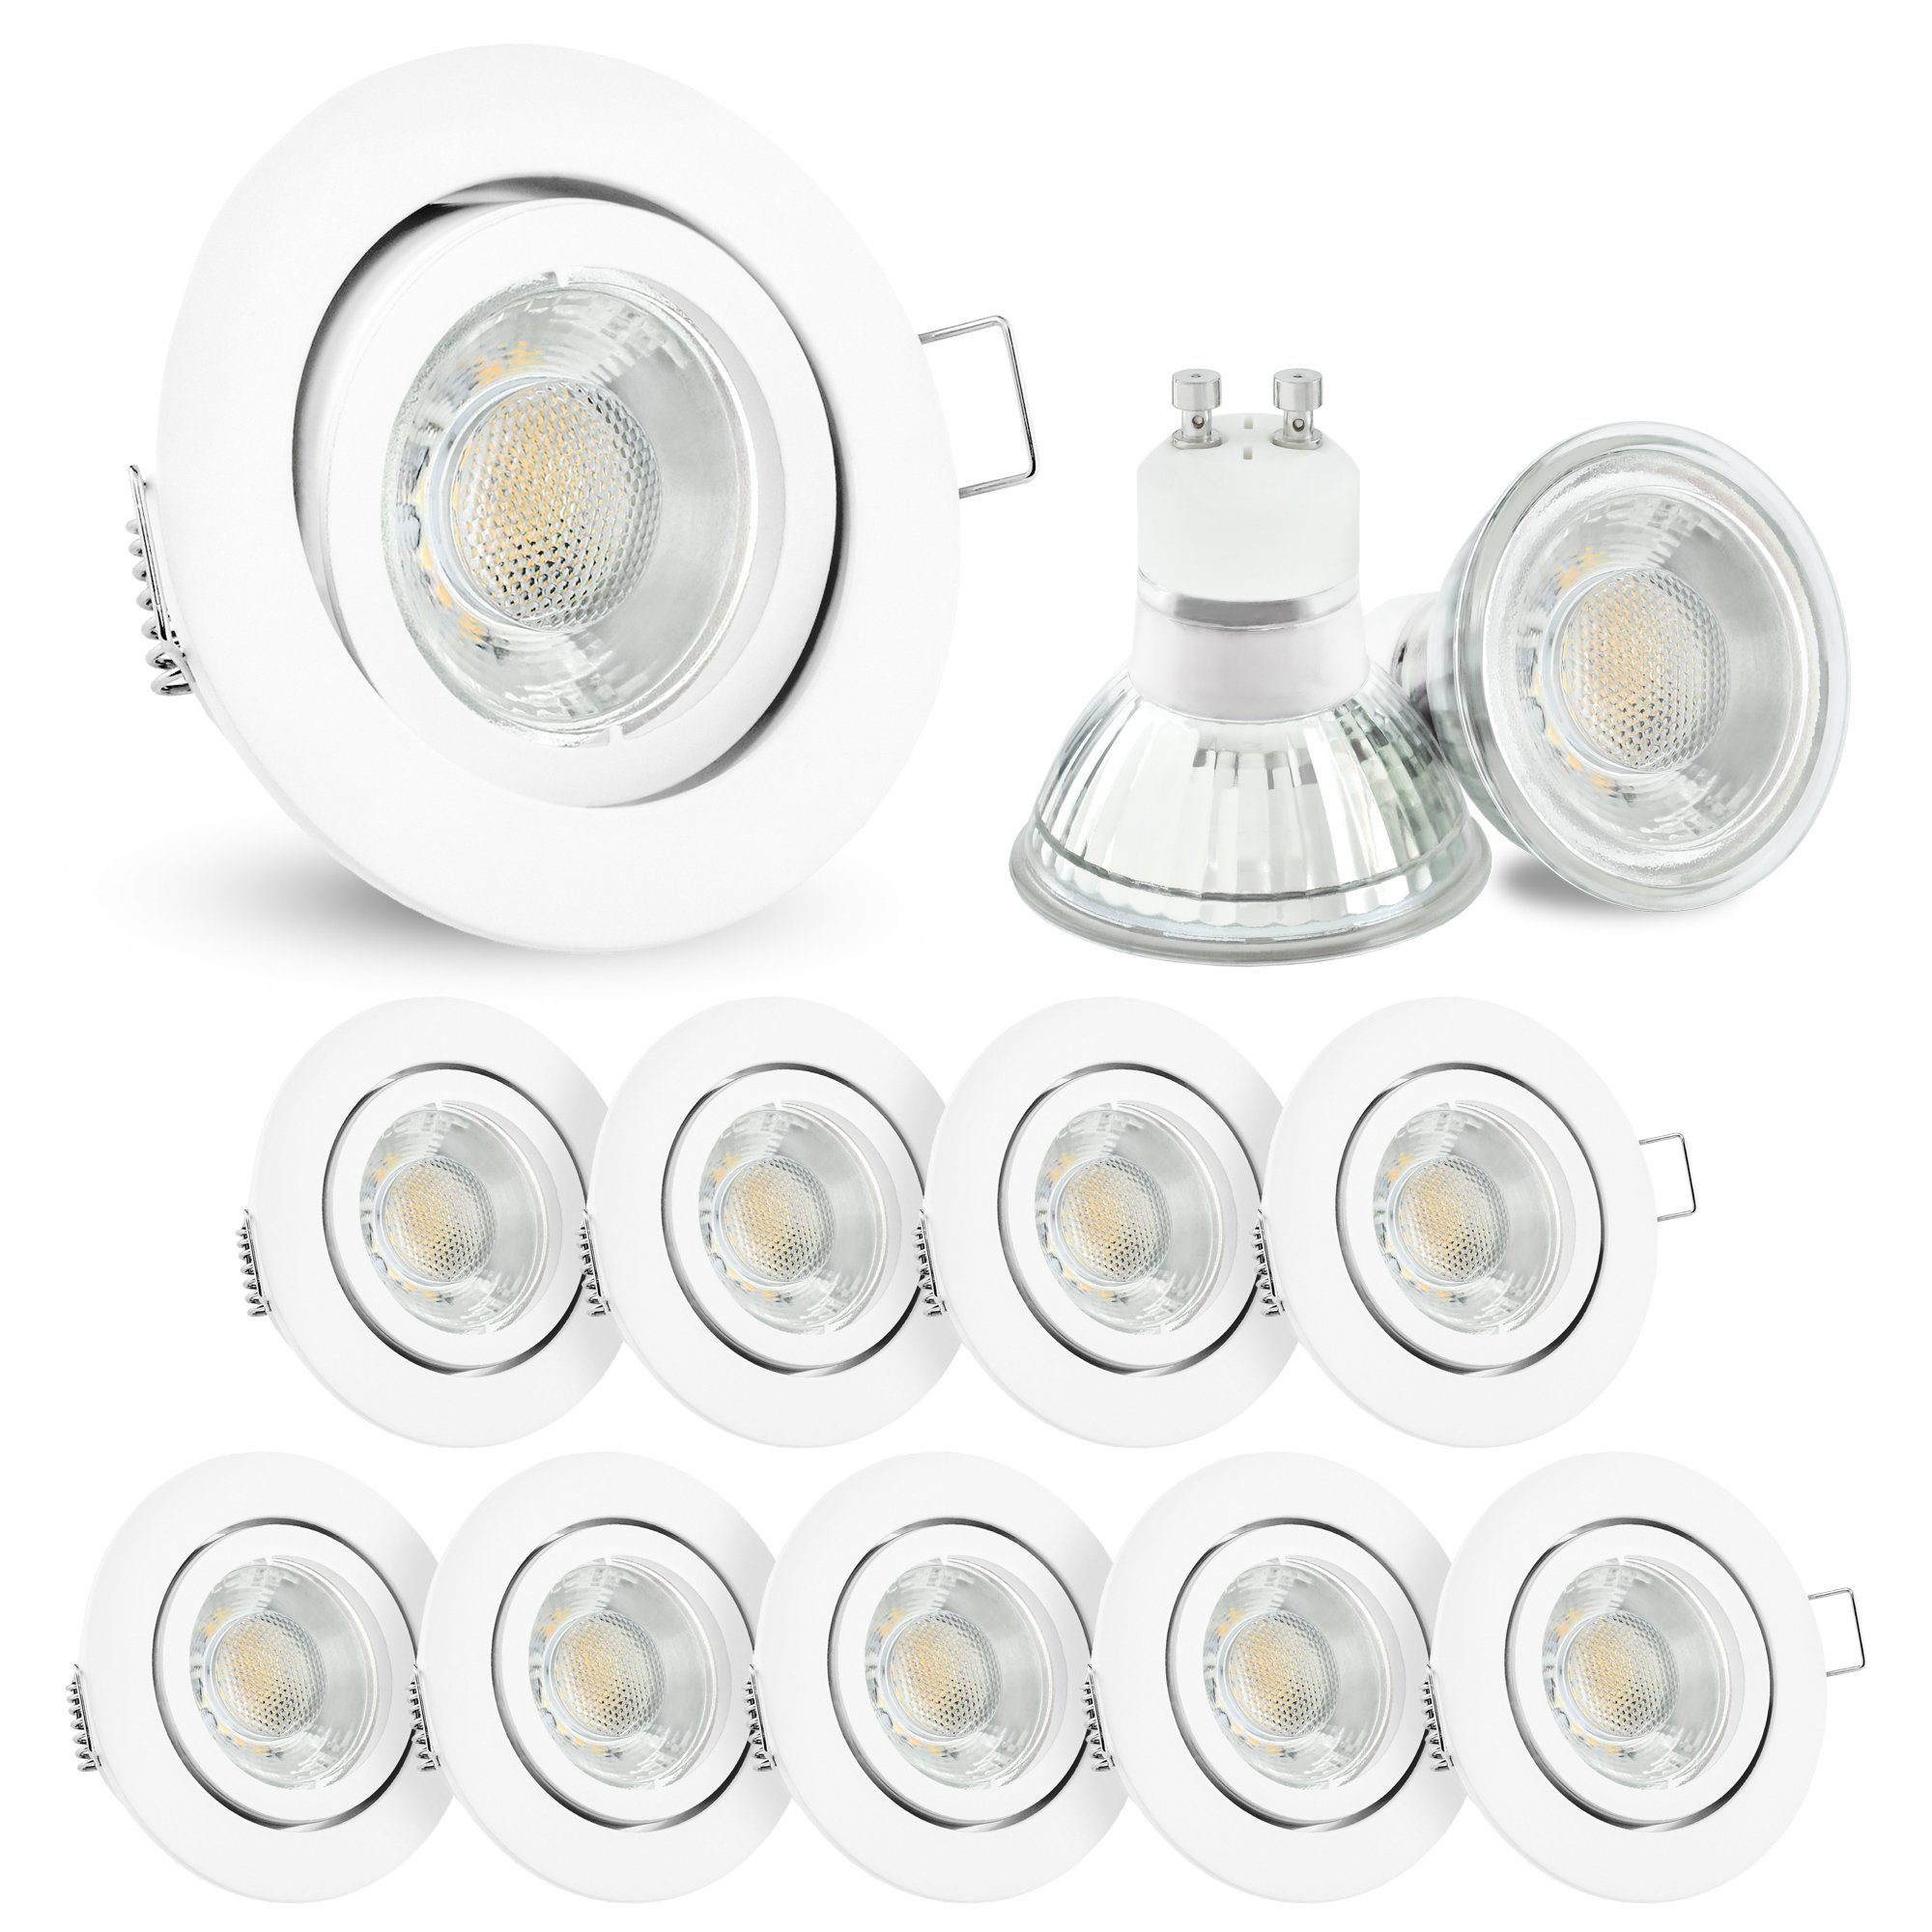 linovum LED Einbaustrahler 10 x LED Einbaustrahler weiss rund schwenkbar Spot inkl. LED GU10, Leuchtmittel inklusive, Leuchtmittel inklusive